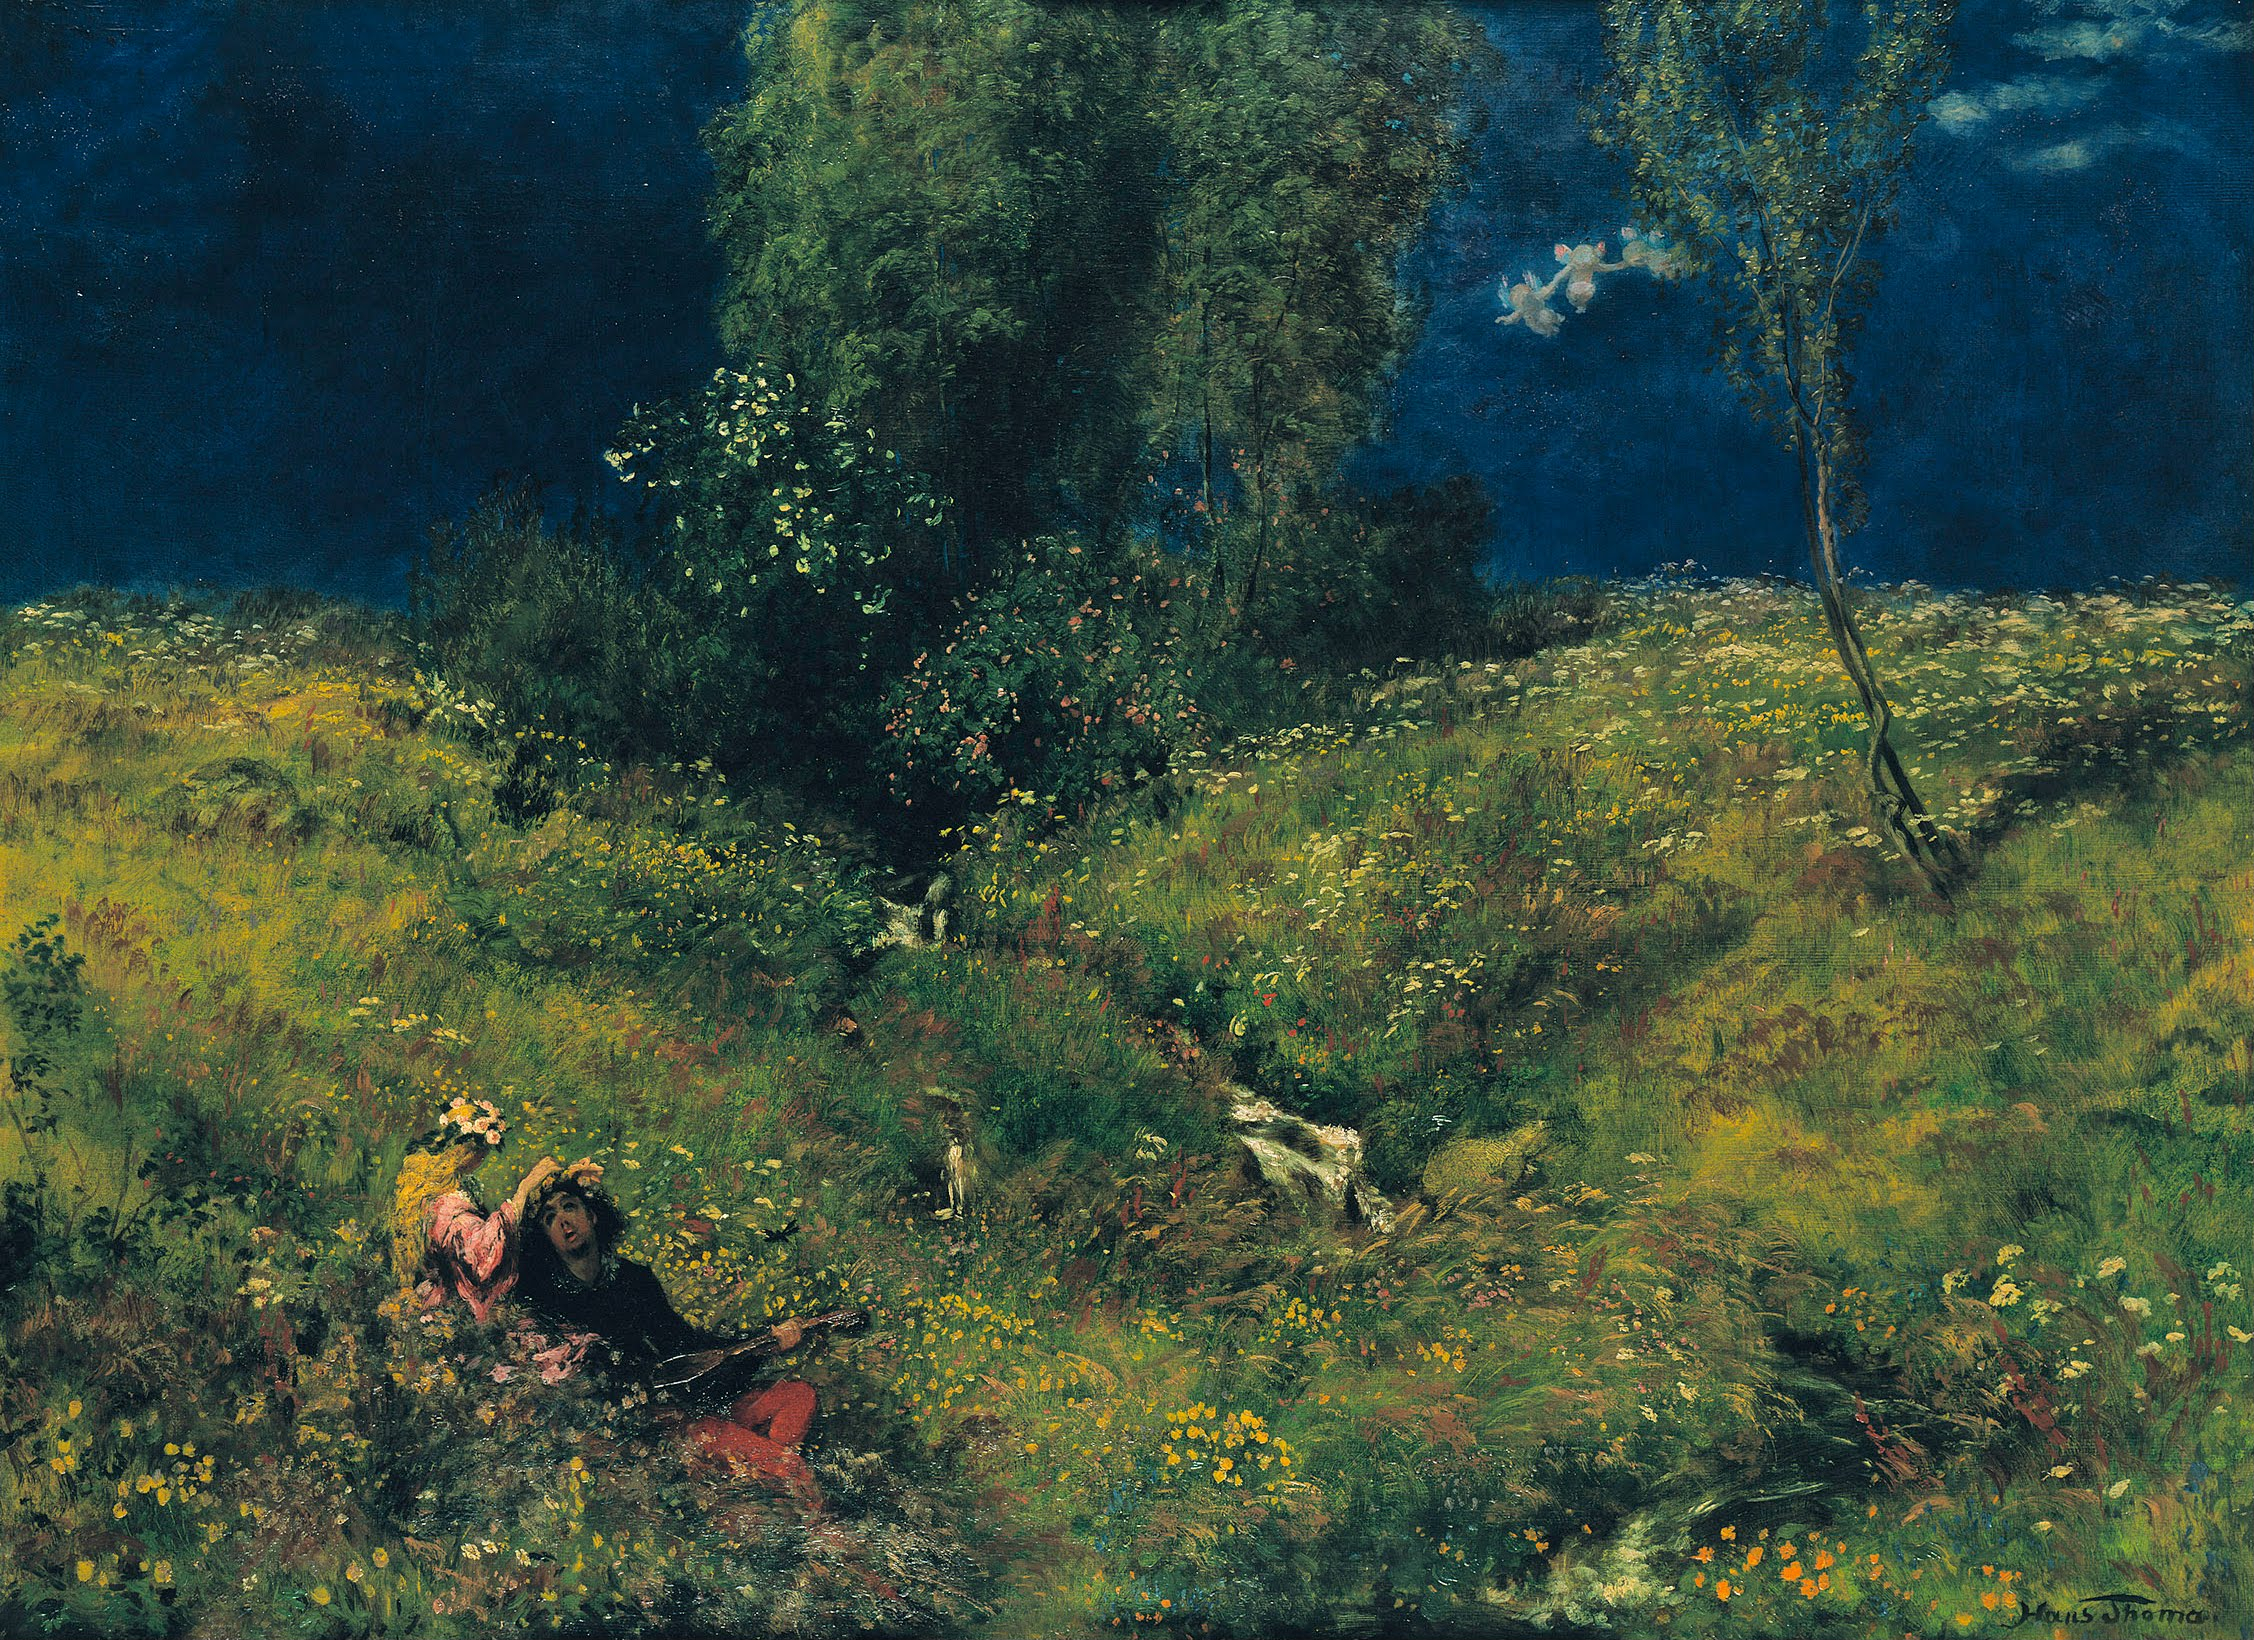 Summer by Hans Thoma - 1872 - 104 x 76.0 cm Alte Nationalgalerie